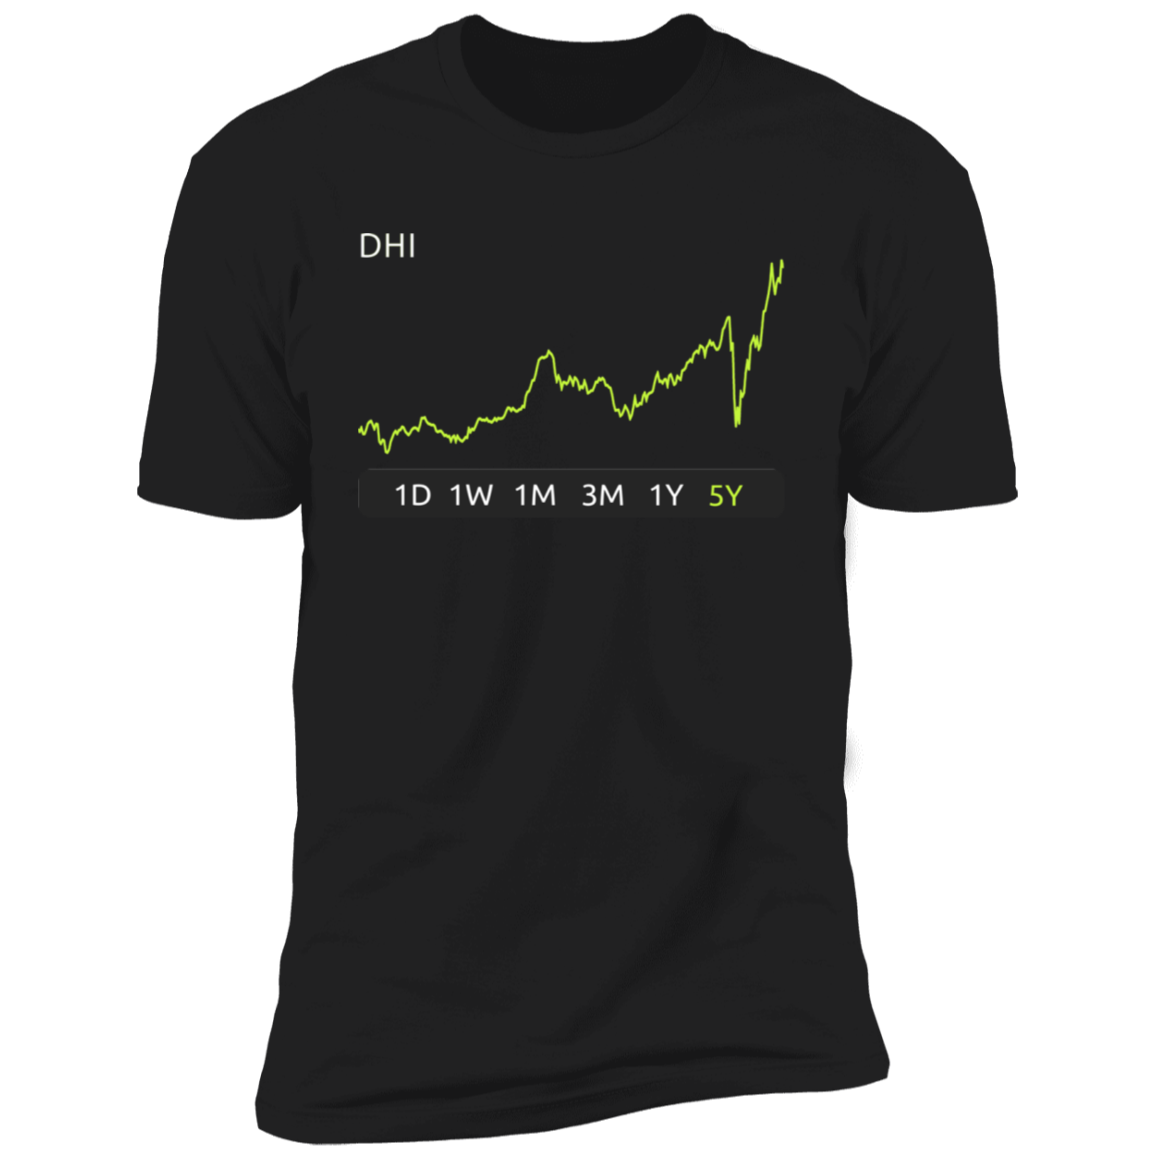 DHI Stock 5y Premium T-Shirt